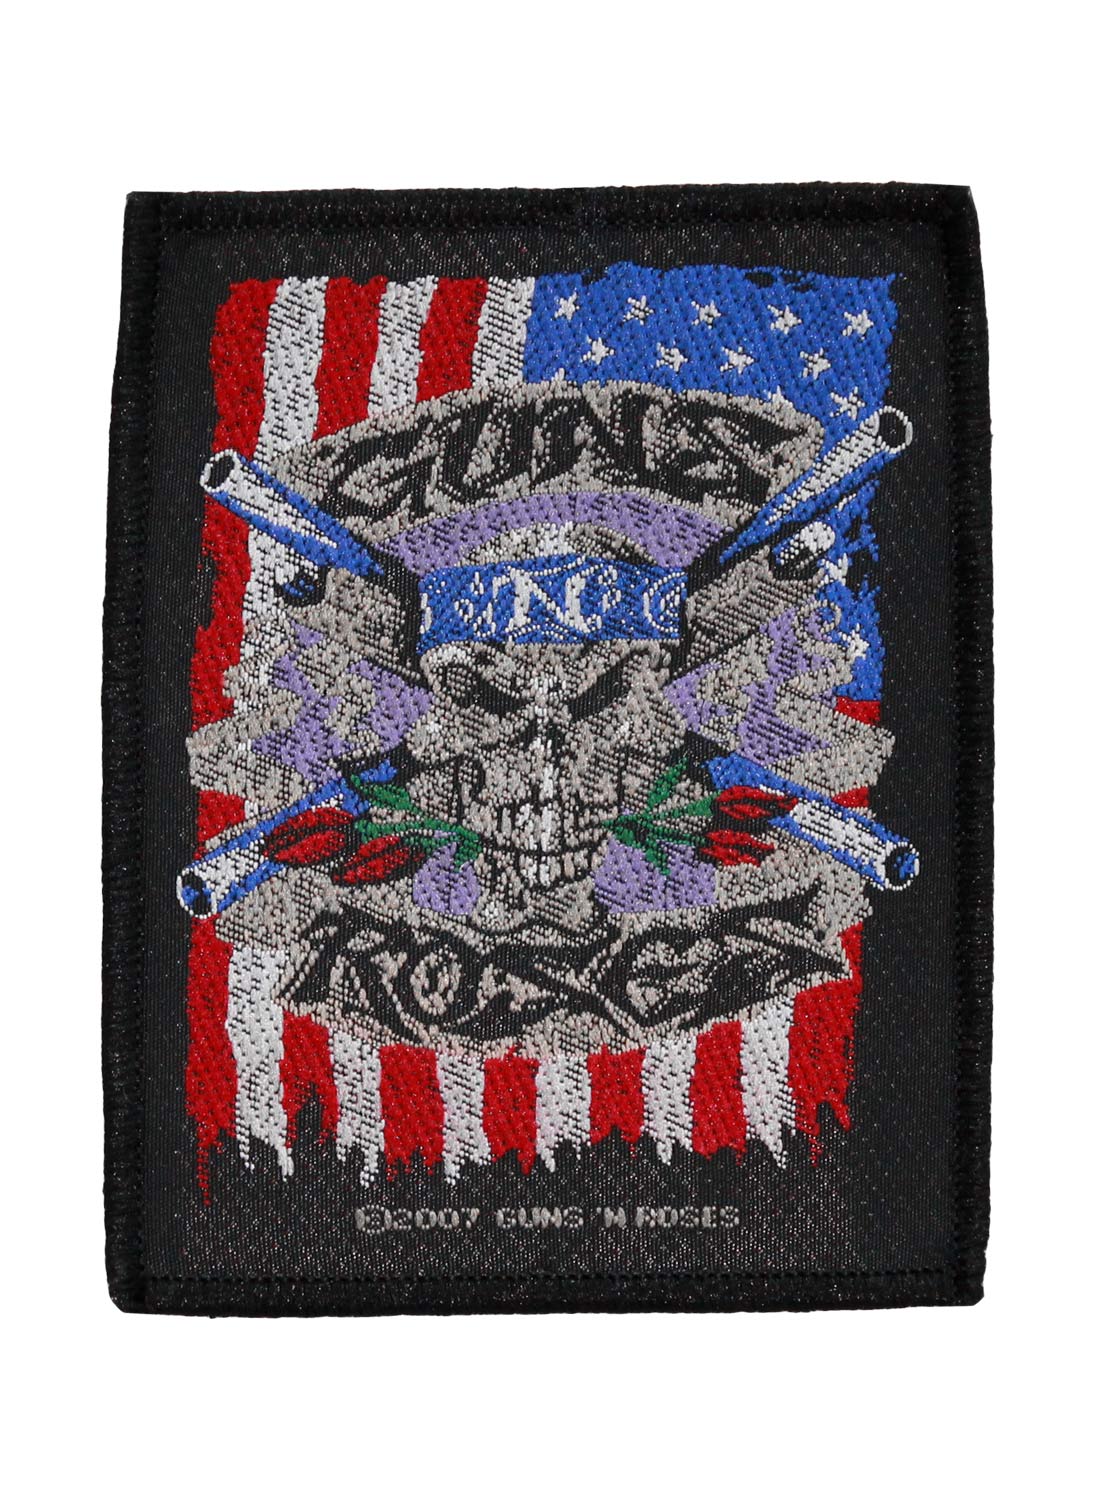 Guns N' Roses Flag Patch